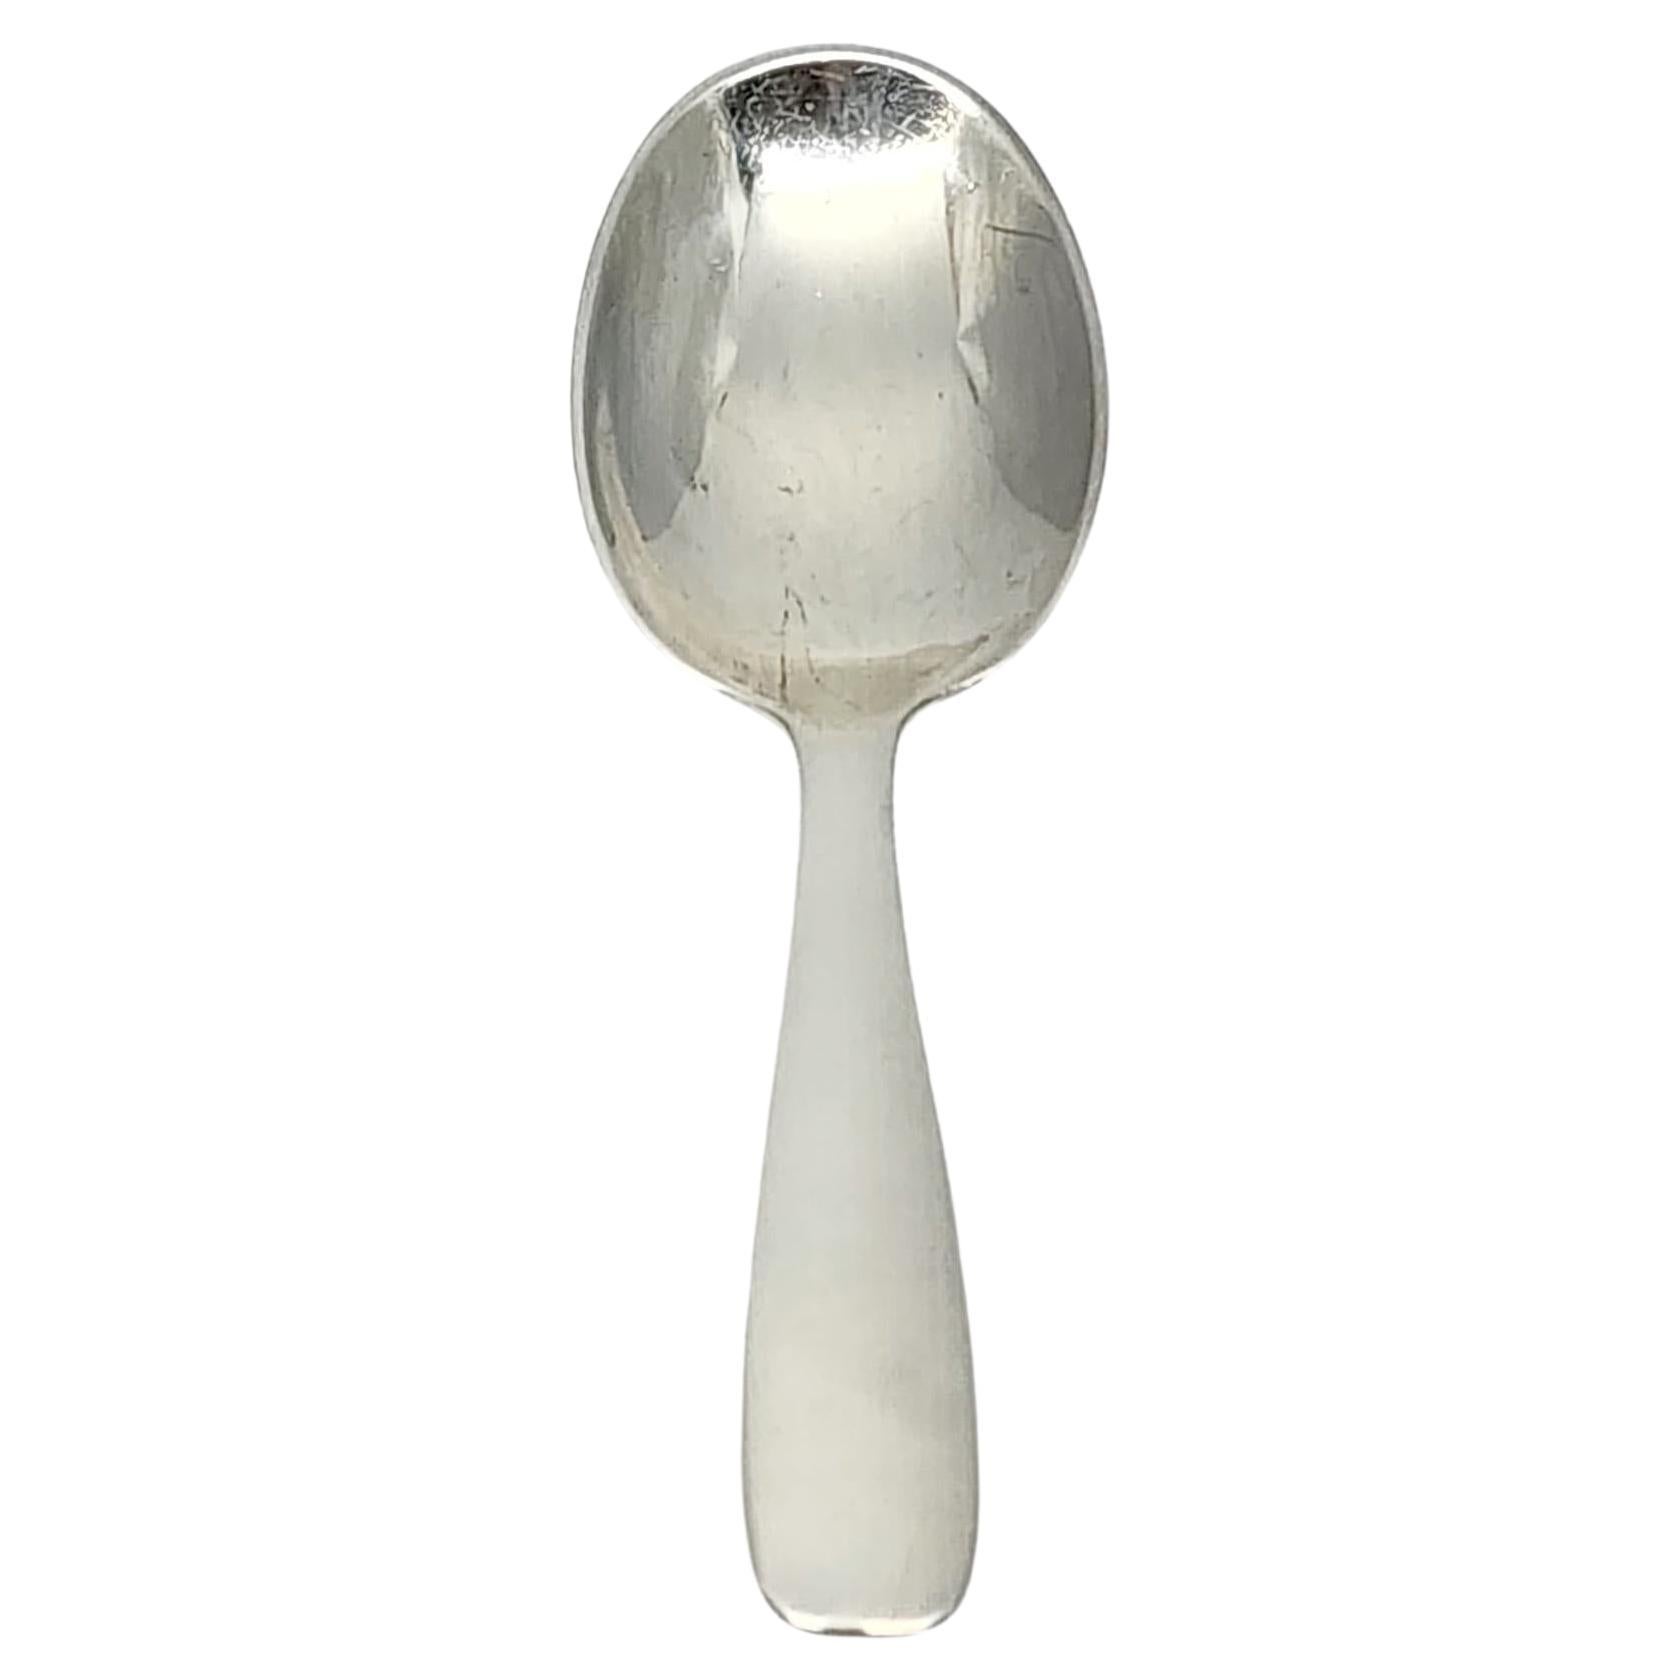 Tiffany & Co Sterling Silver Baby/Child Feeding Spoon #15492